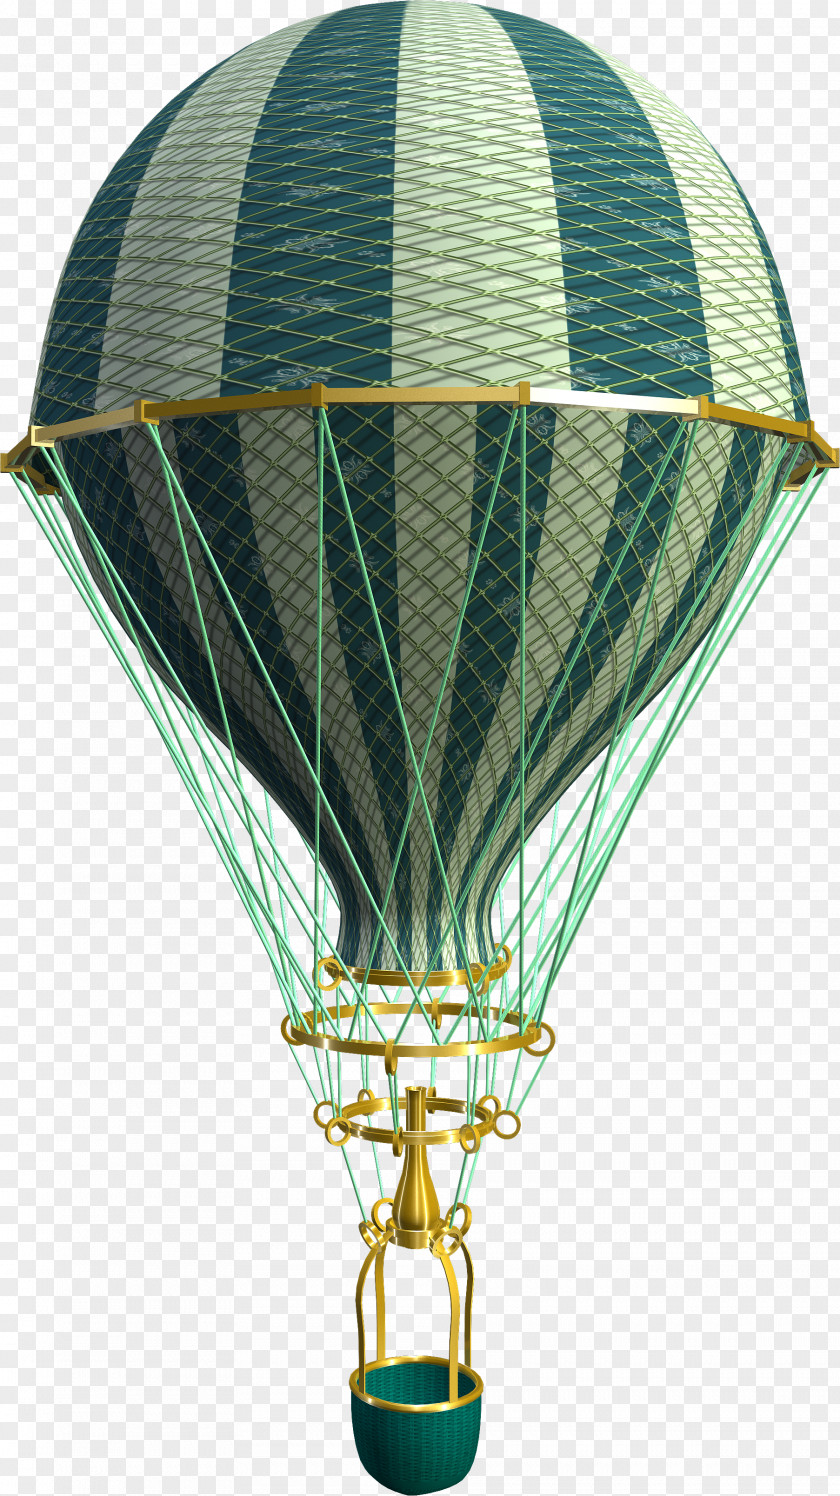 Green Mesh Hot Air Balloon Material Free To Pull Flight Aerostat PNG